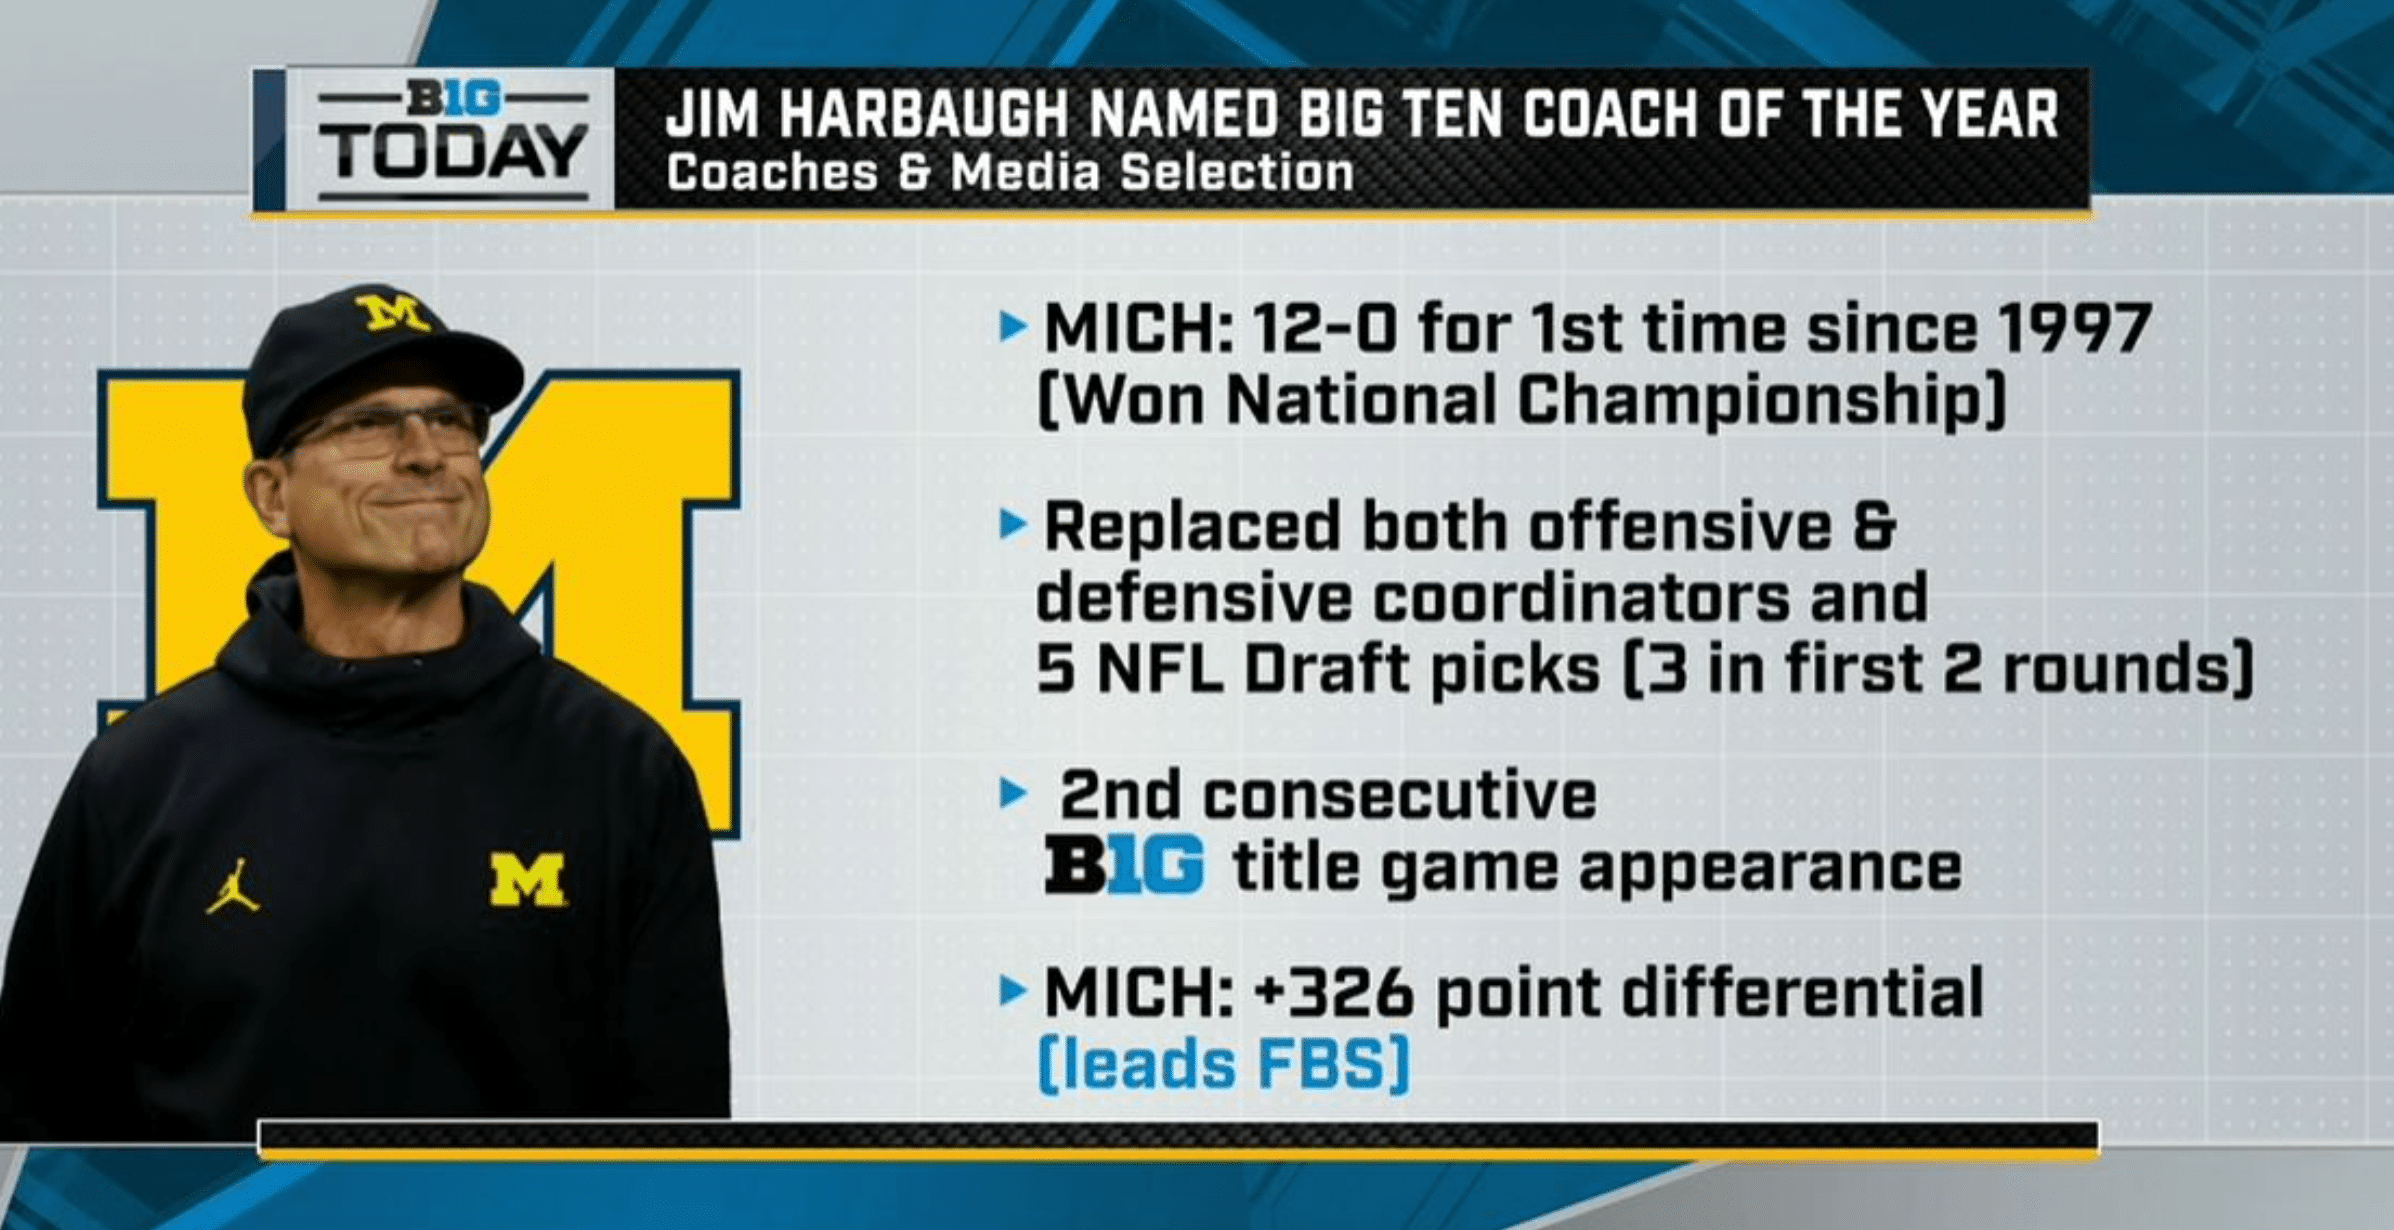 Jim Harbaugh B1G Coach of the Year